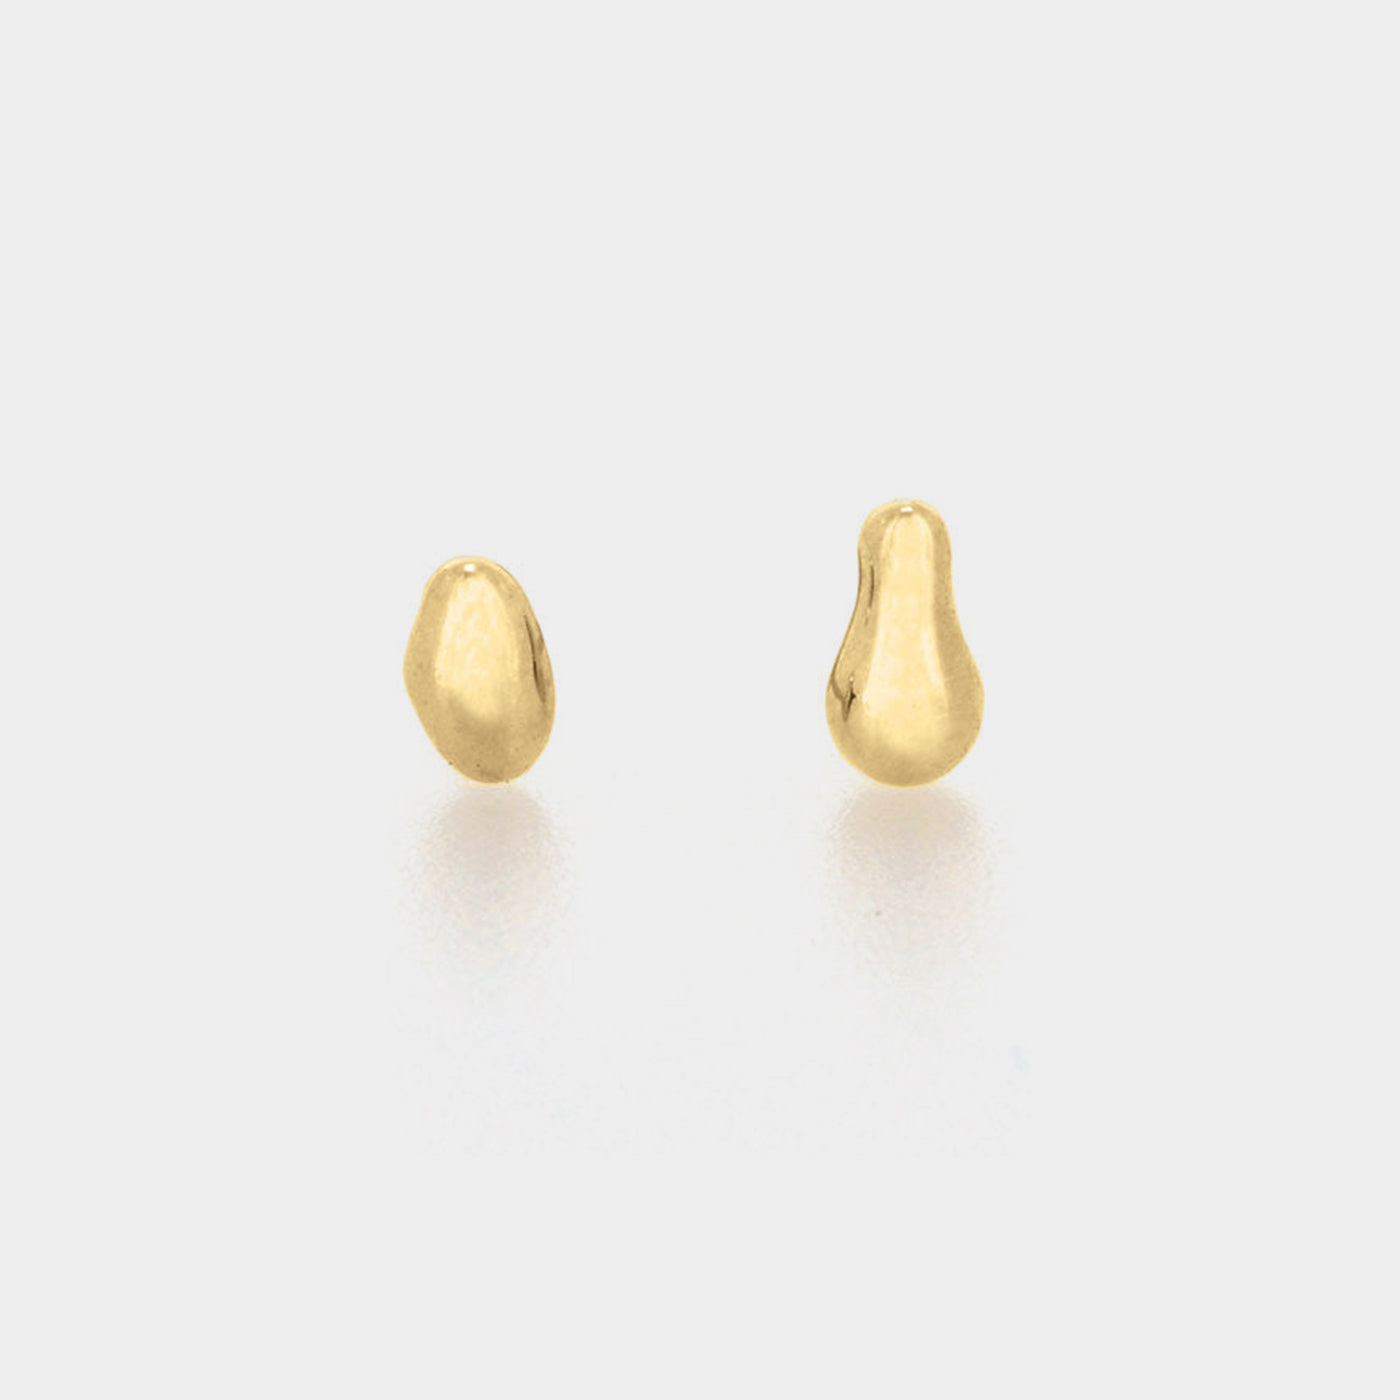 Linda Tahija - Organica Stud Earrings - Gold Plated